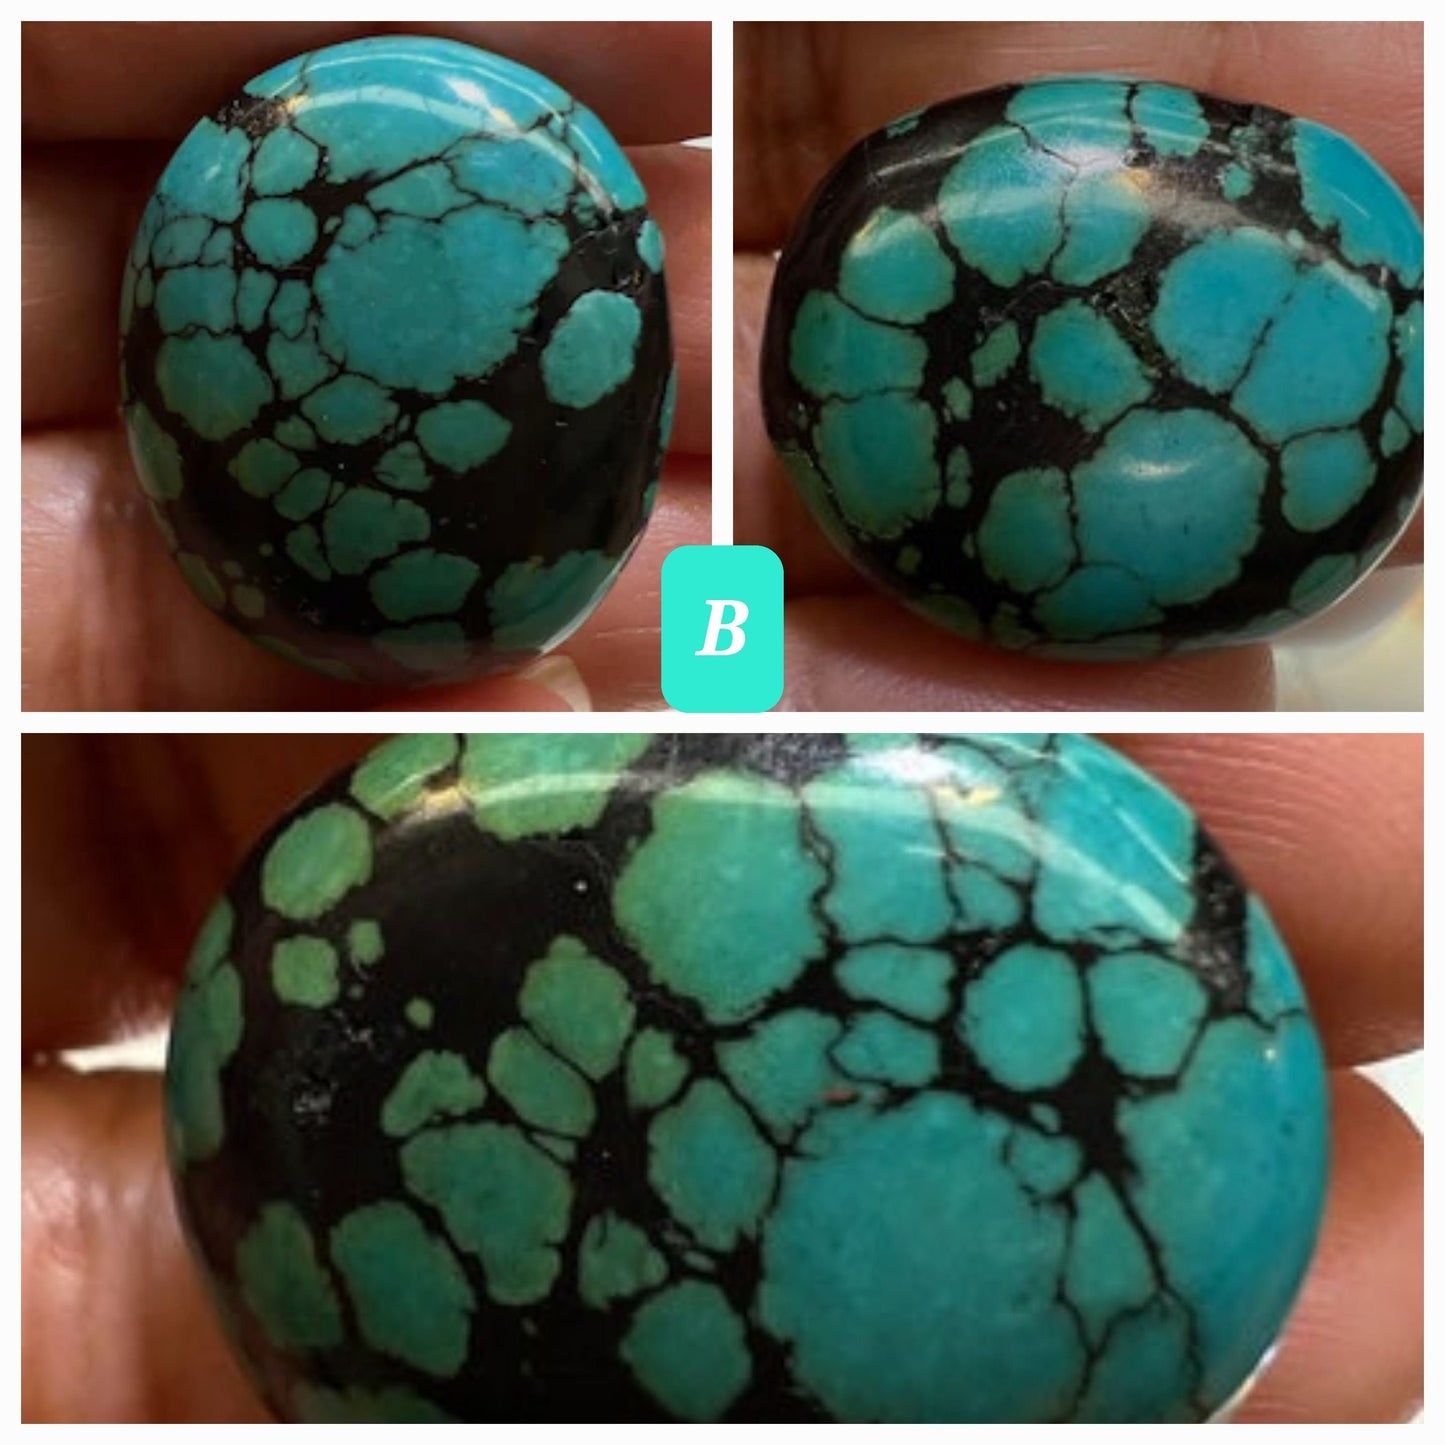 Turquoise Pebble, AAA Tibetan Spiderweb Blue Turquoise pebble, Rare, jewelry, Focal, pendant, palm stone, pocket stone, collection, healing